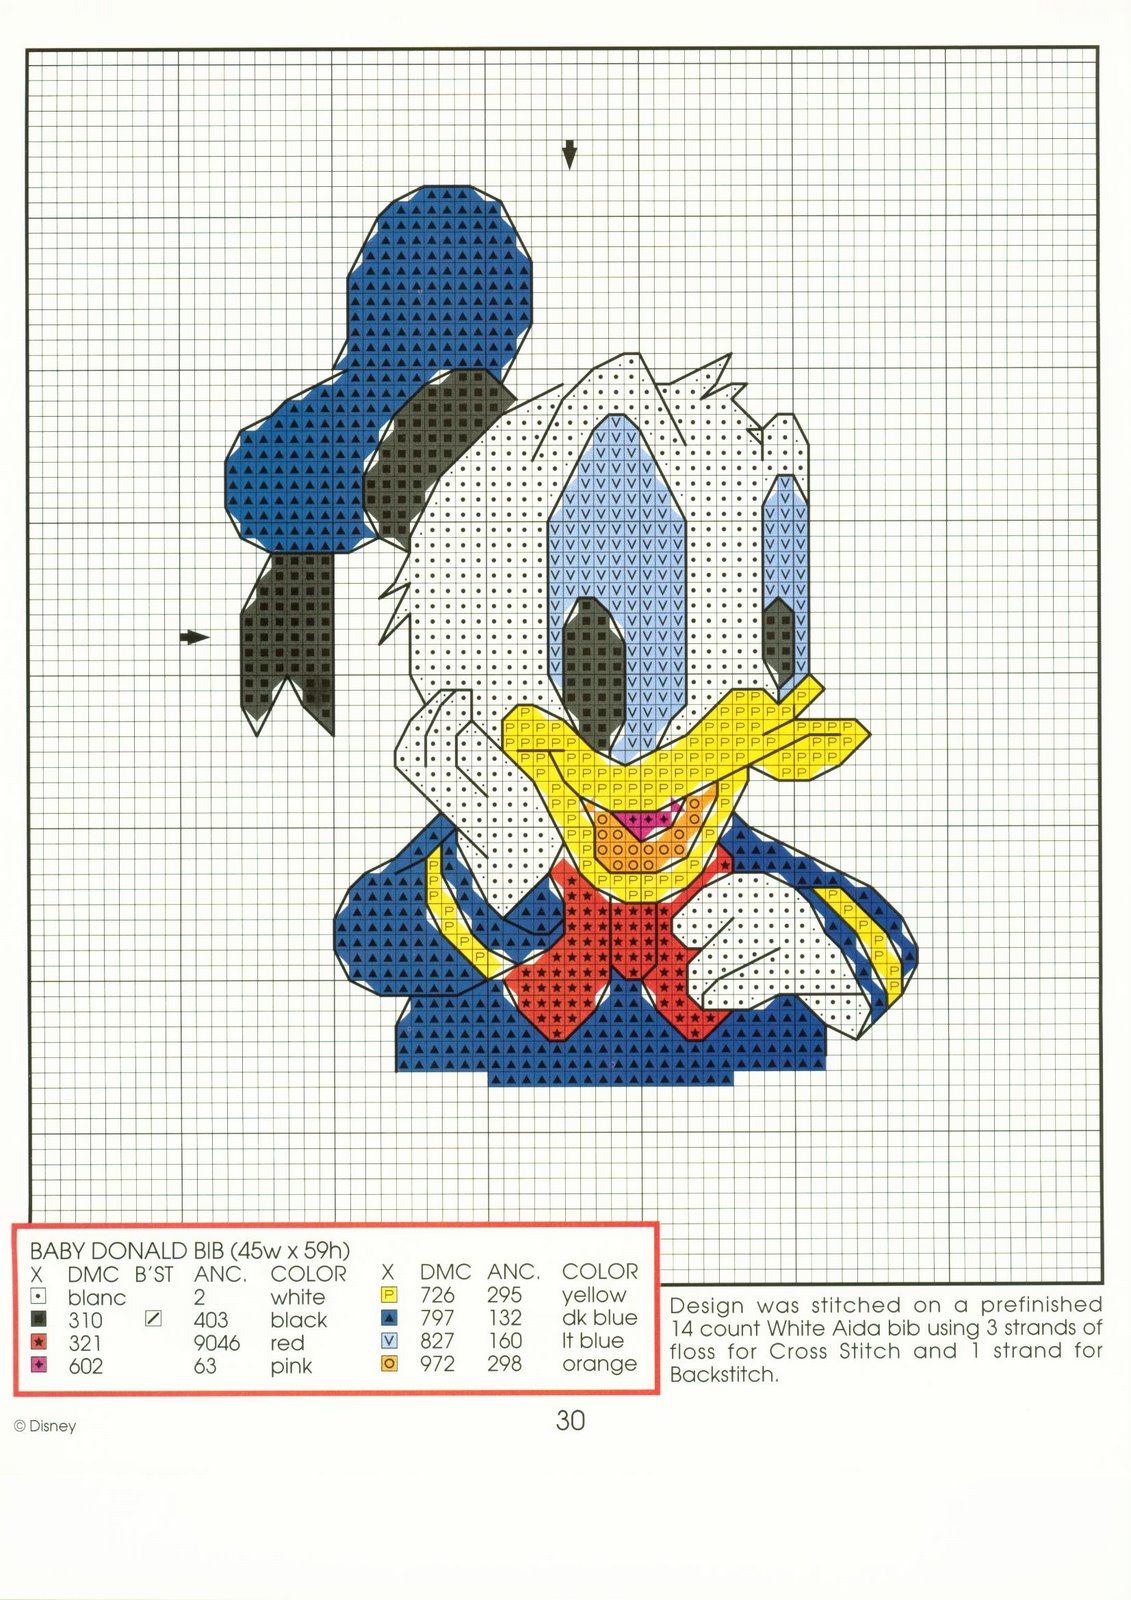 Cross stitch patterns to download Disney (11)